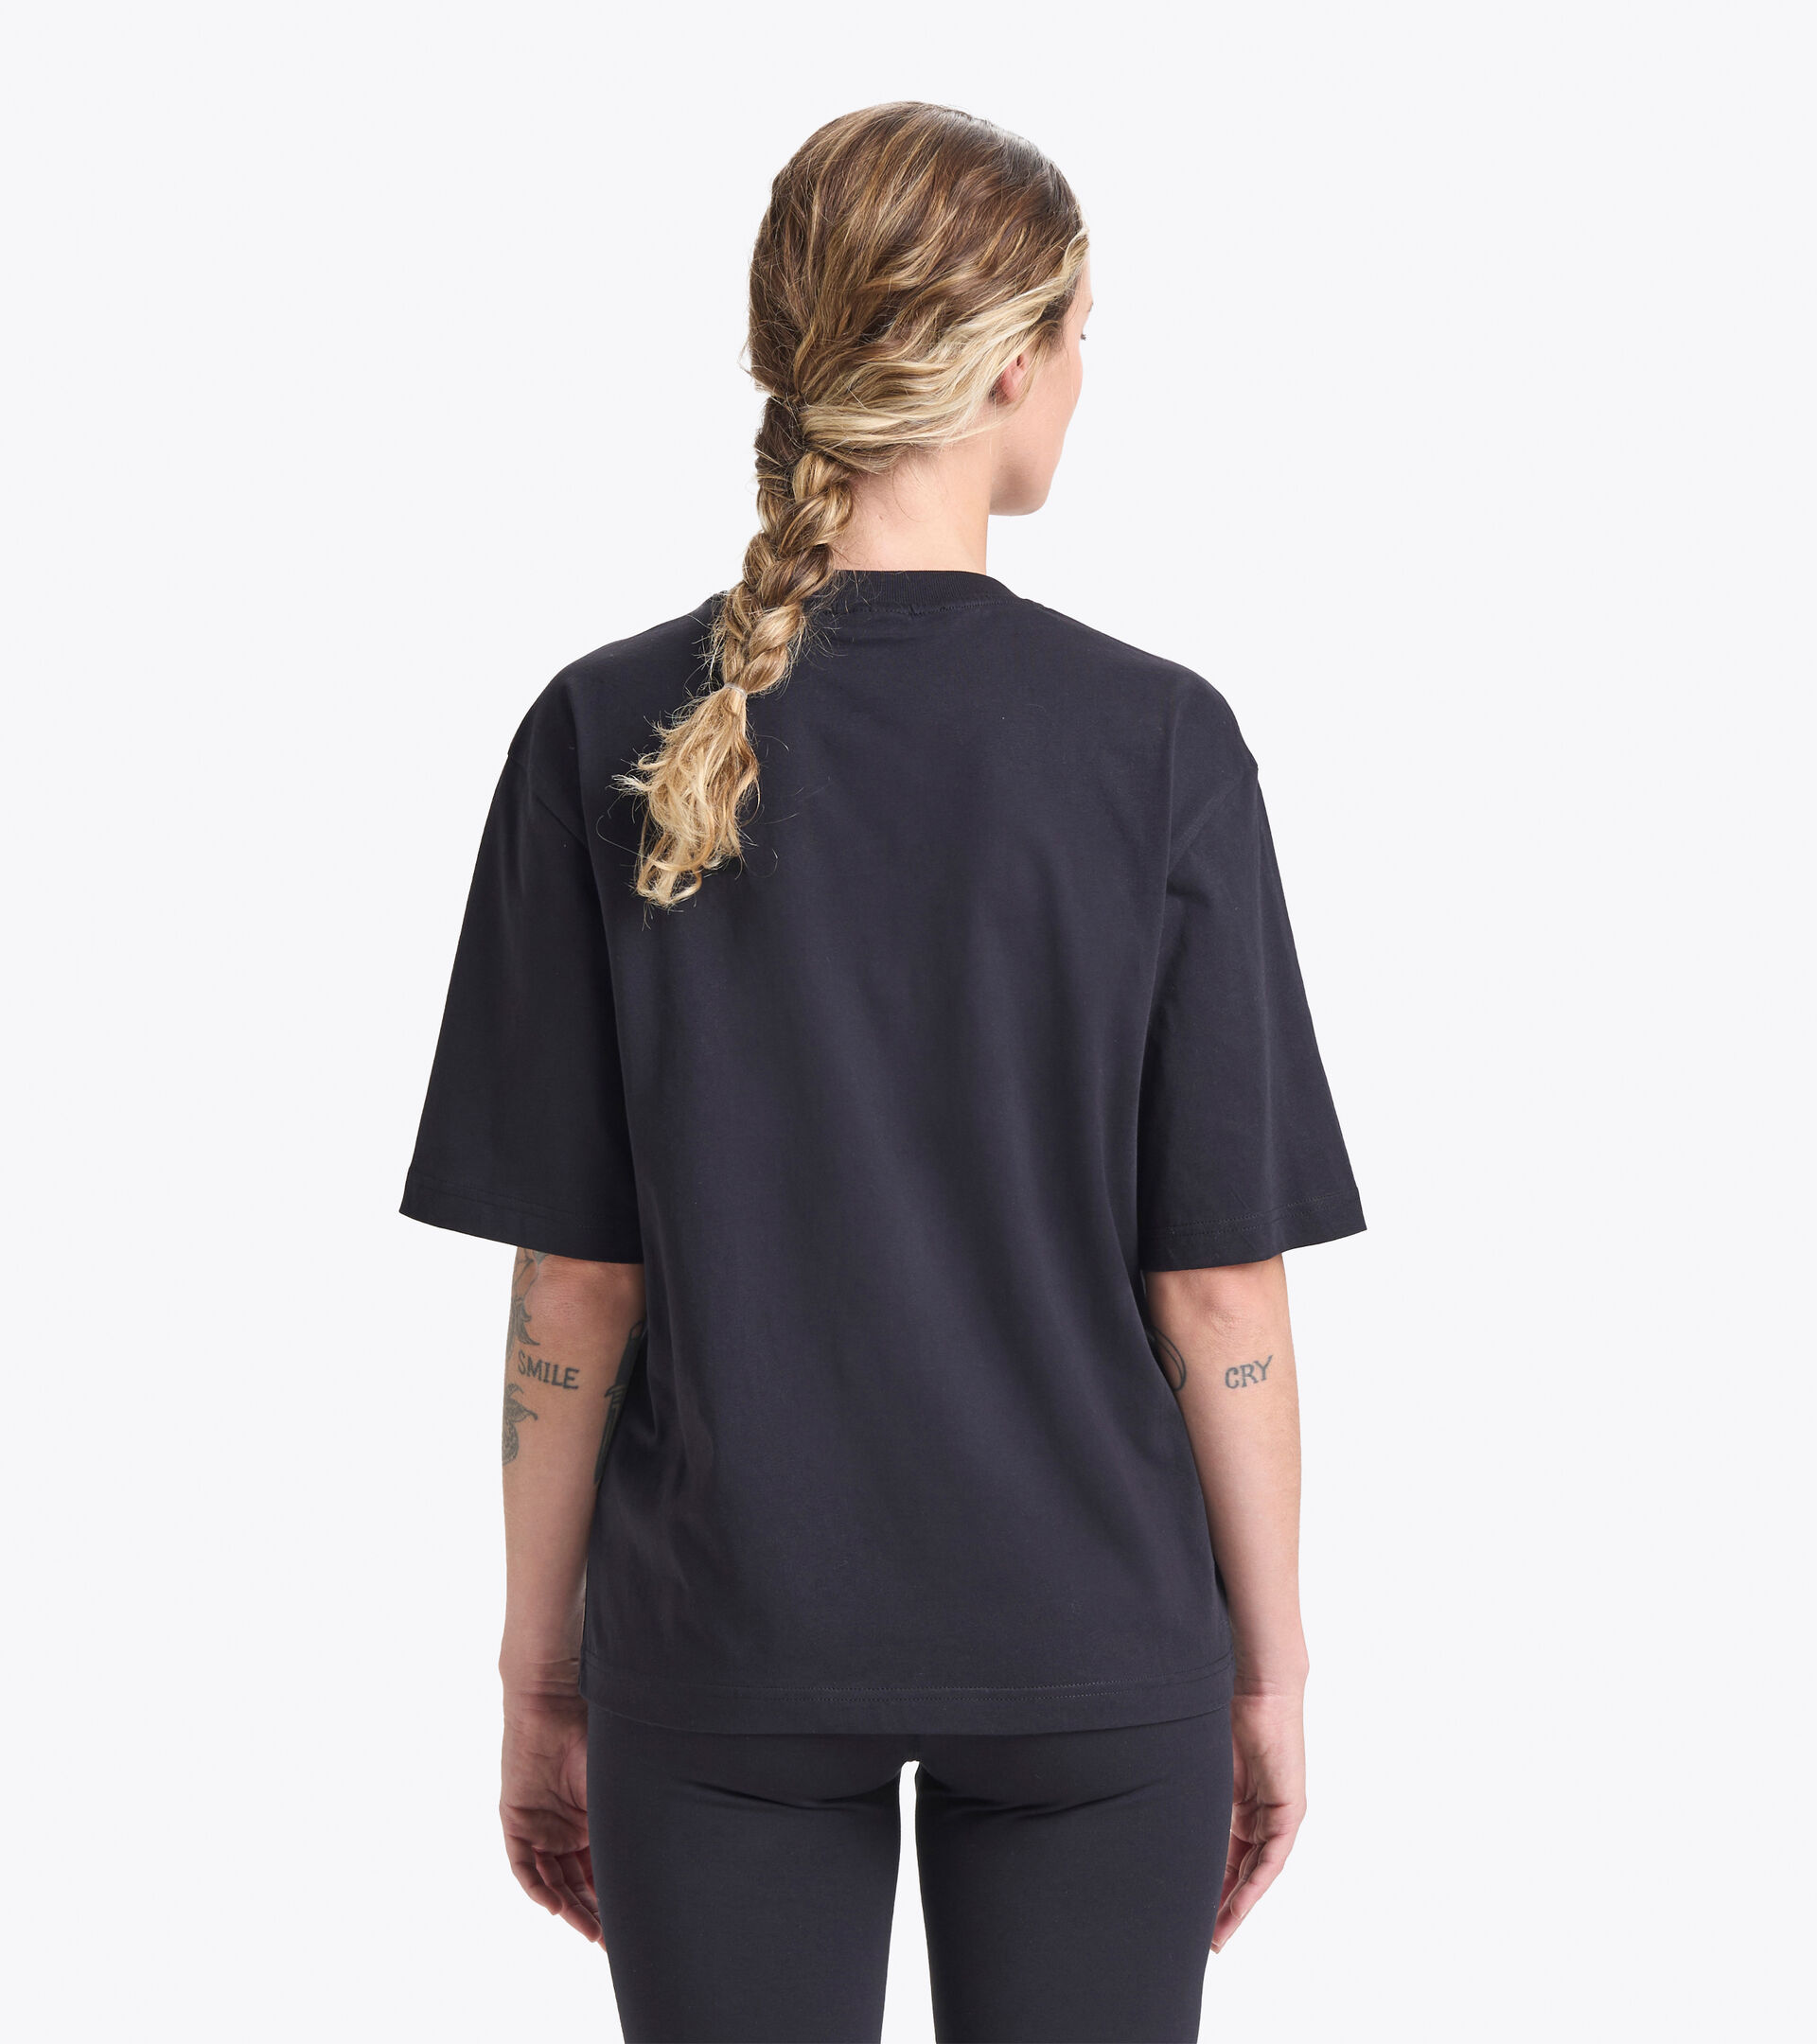 T-shirt in cotone - Donna L. T-SHIRT SS SPW LOGO NERO - Diadora